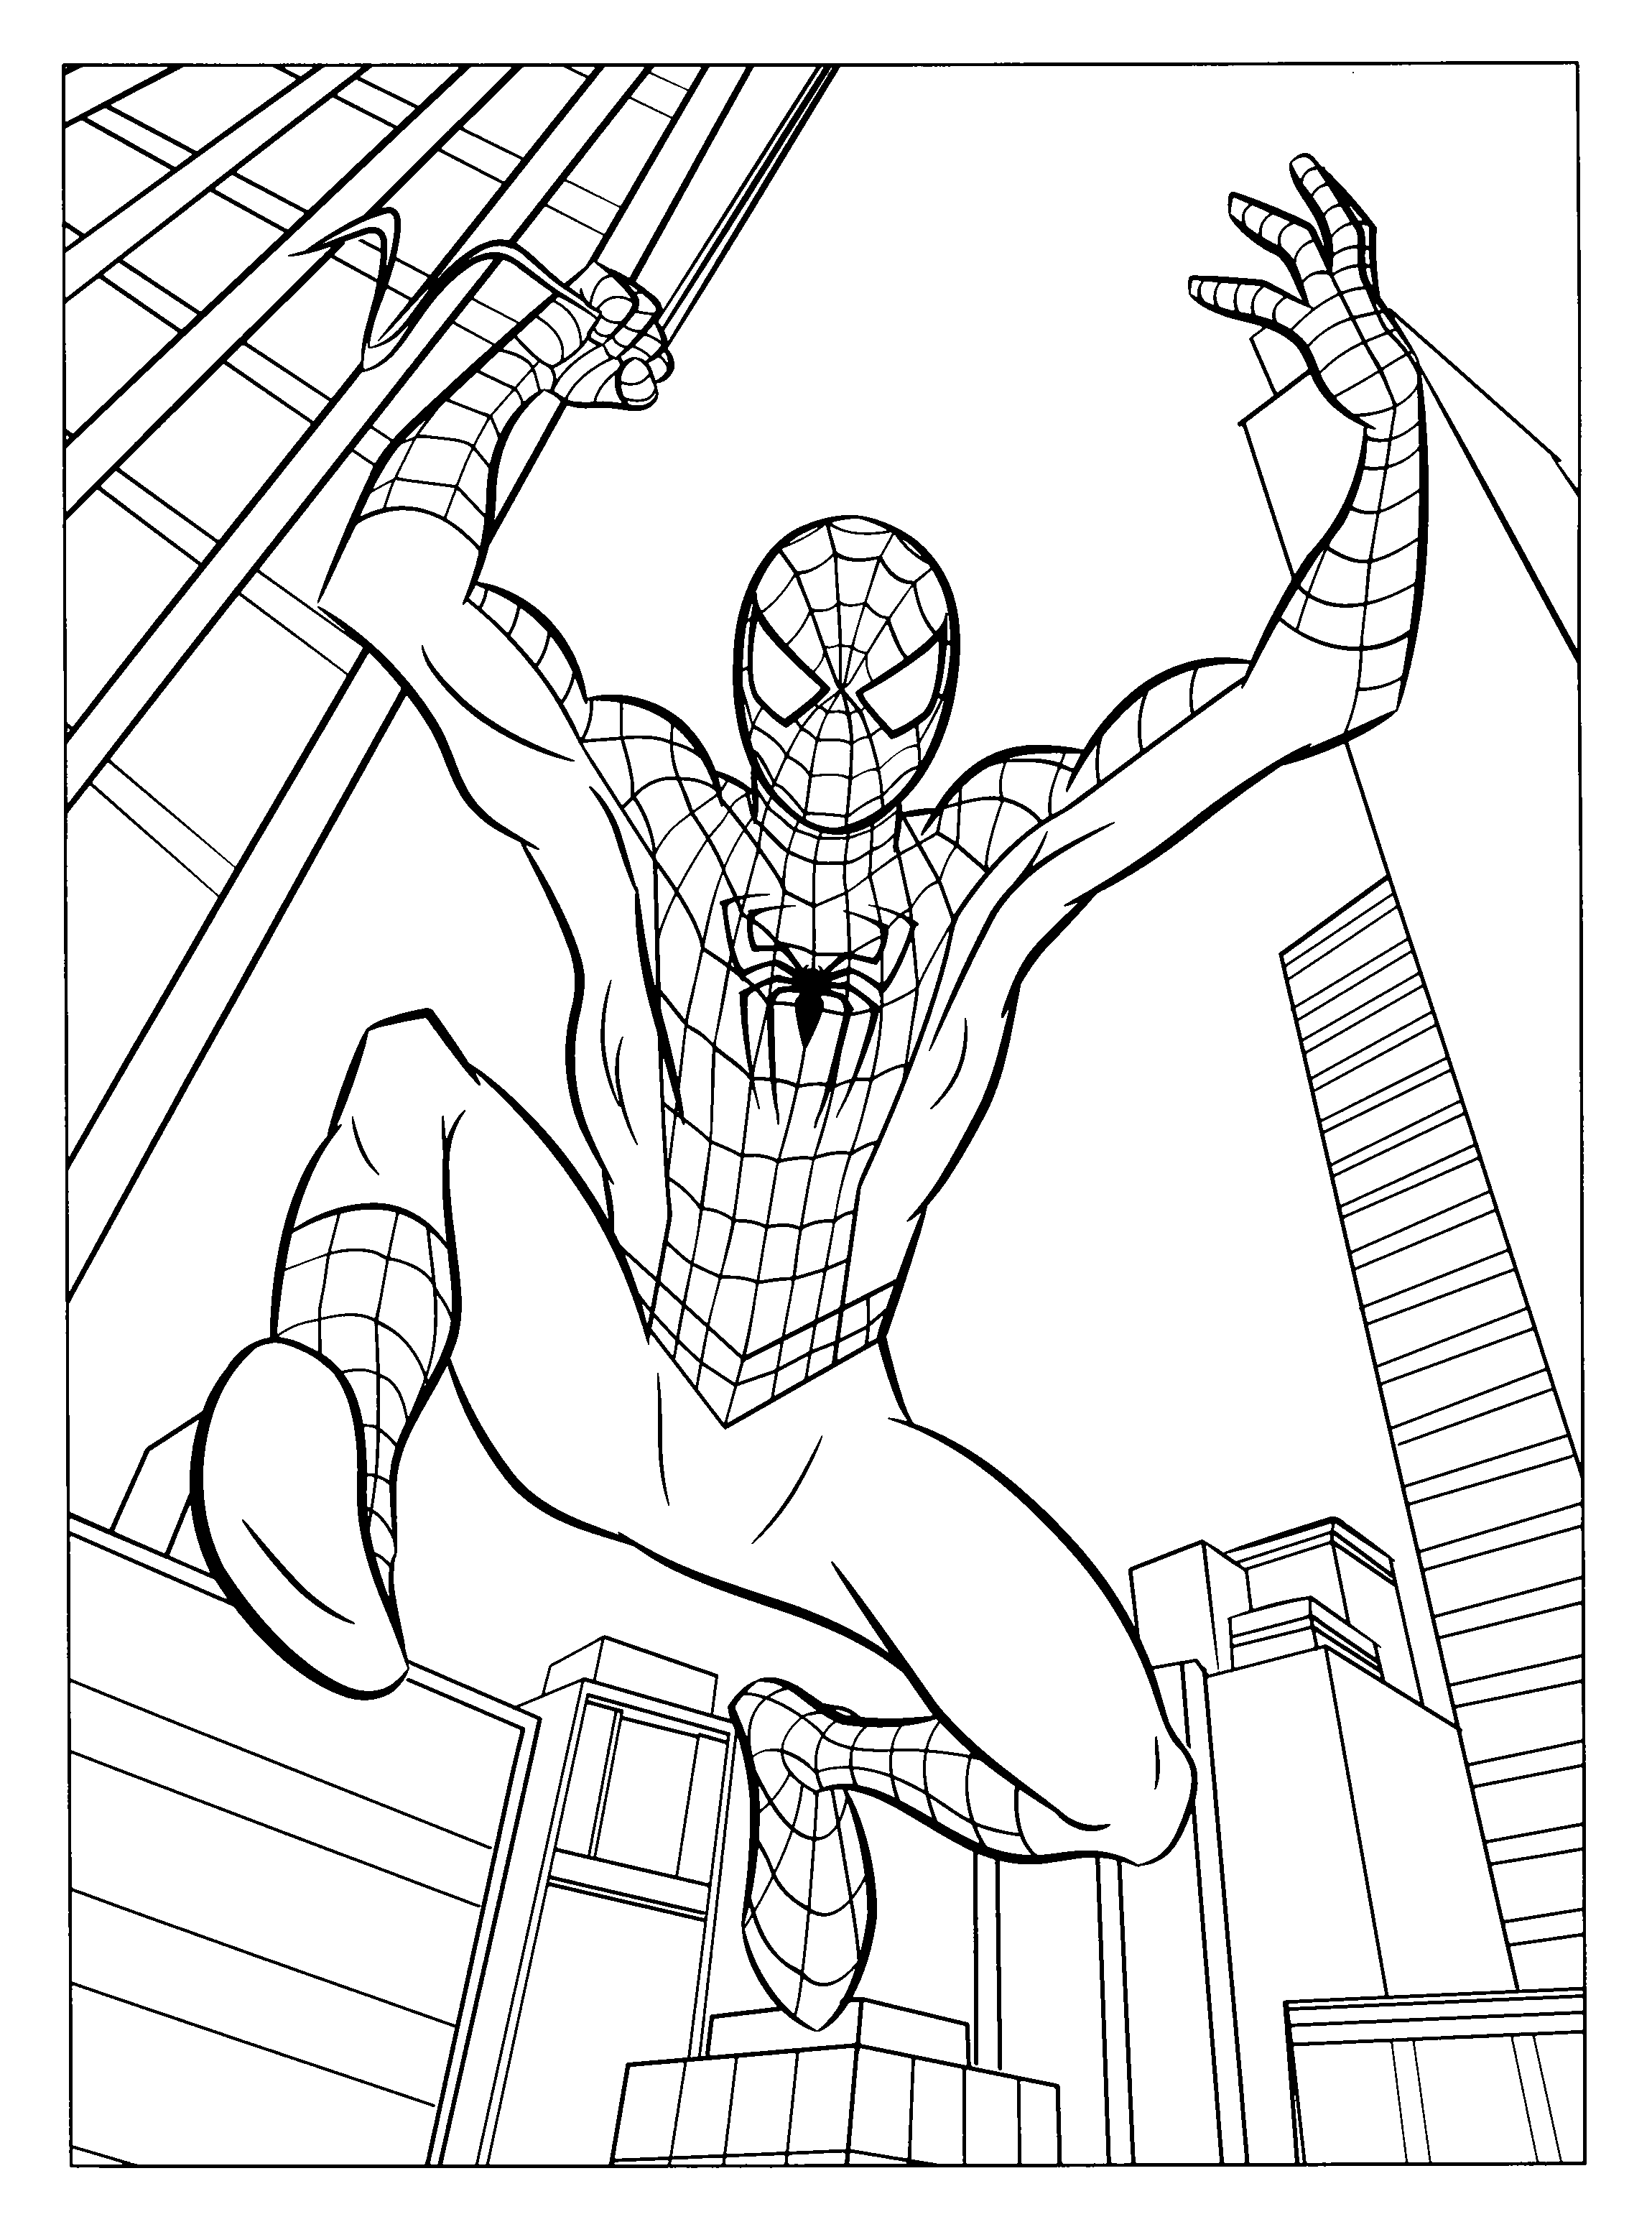 Image for kids spiderman